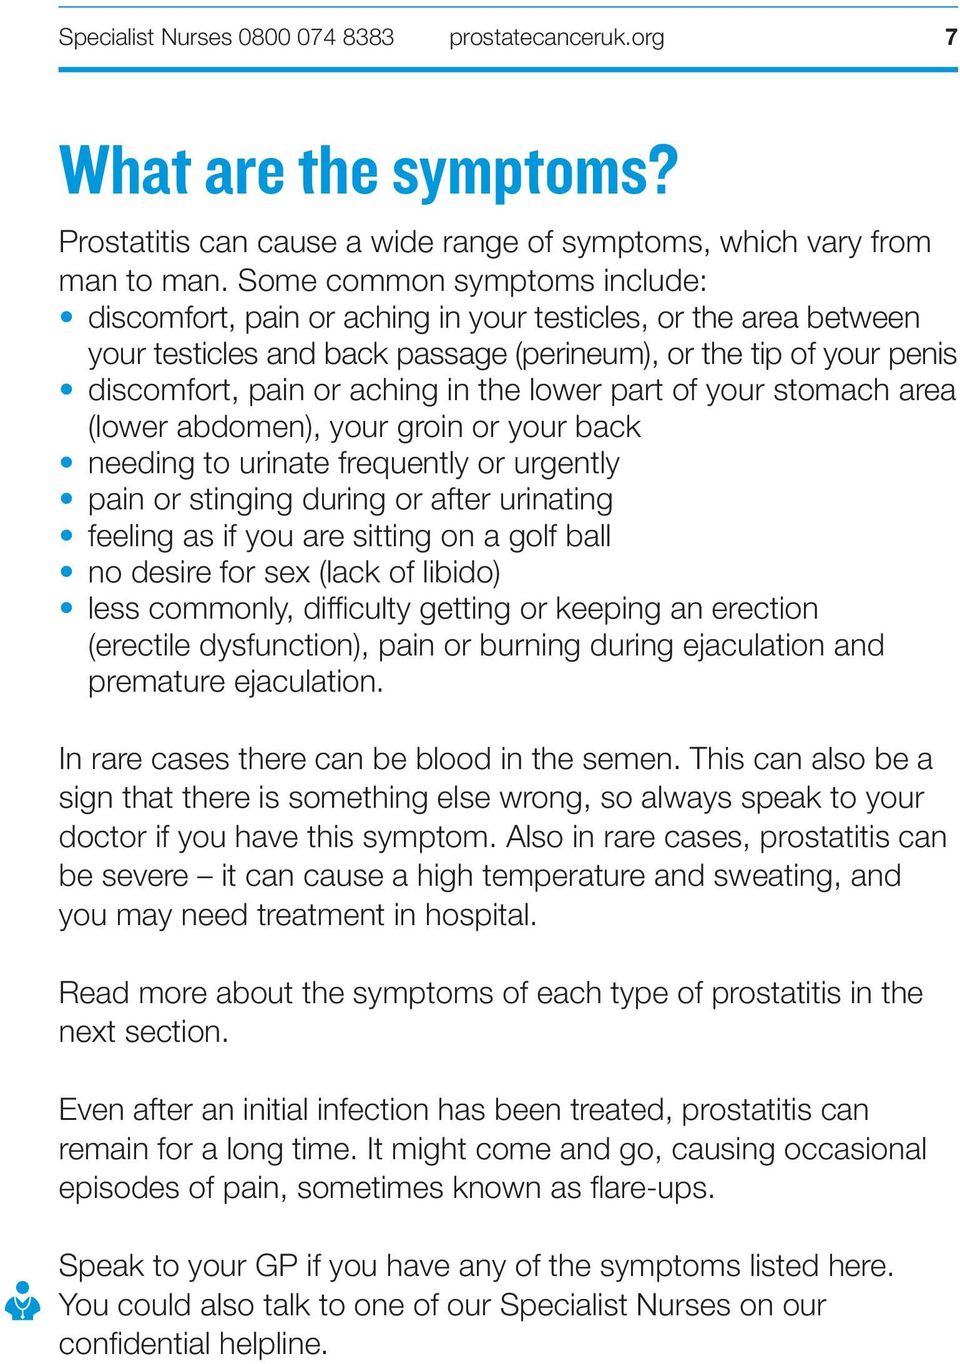 causes of prostatitis flare ups)